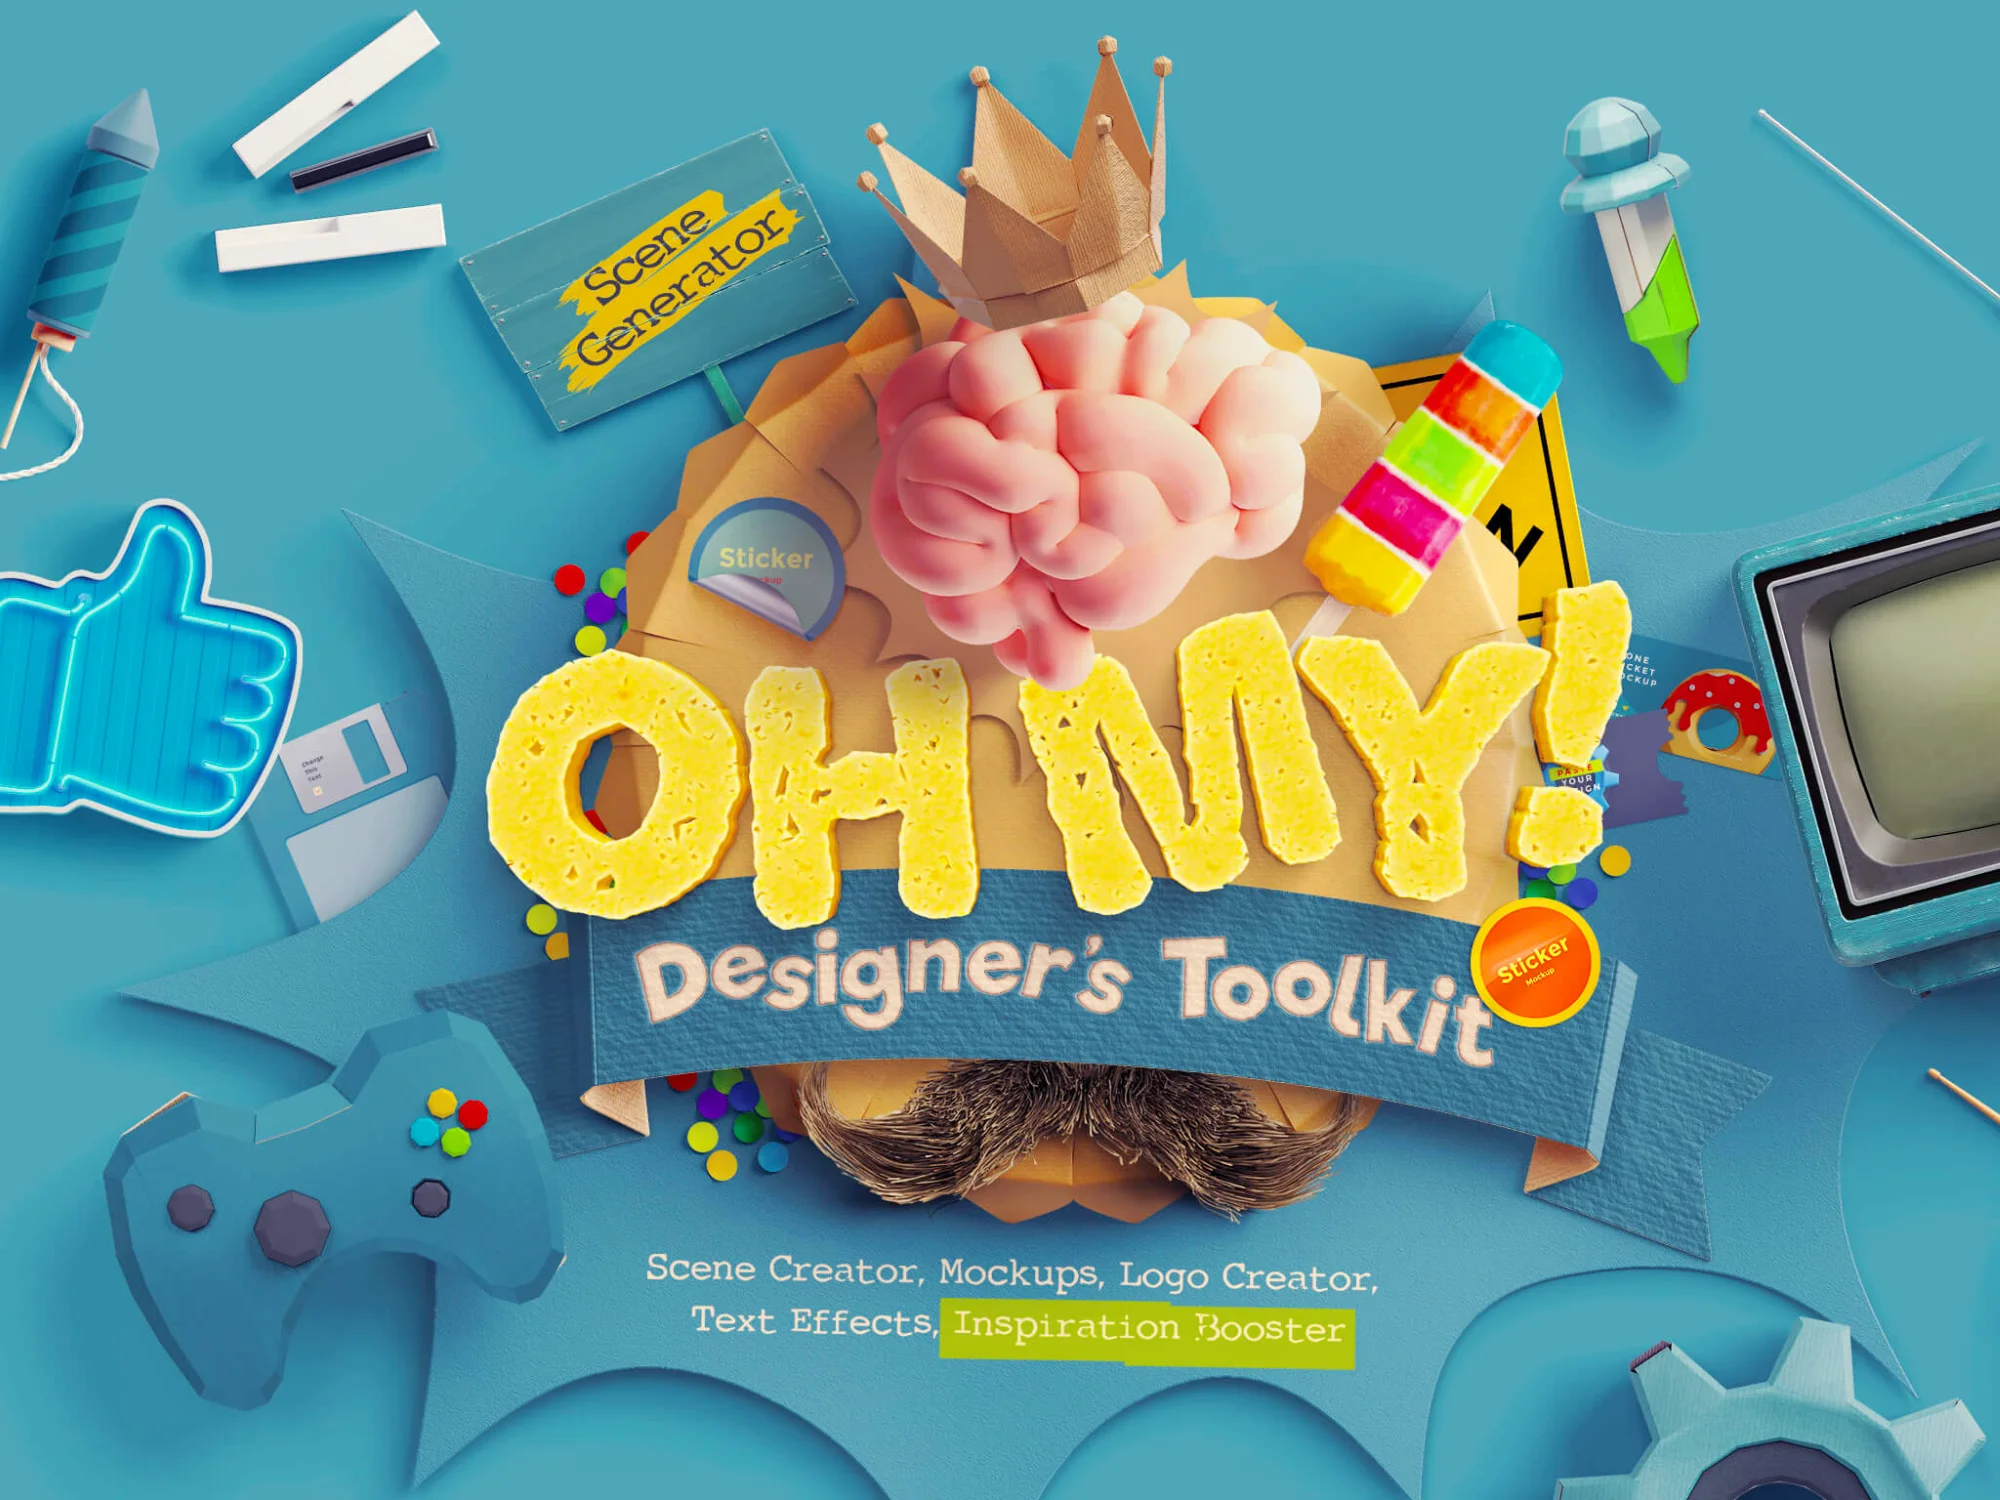 [LS] Oh My! Designer's Toolkit